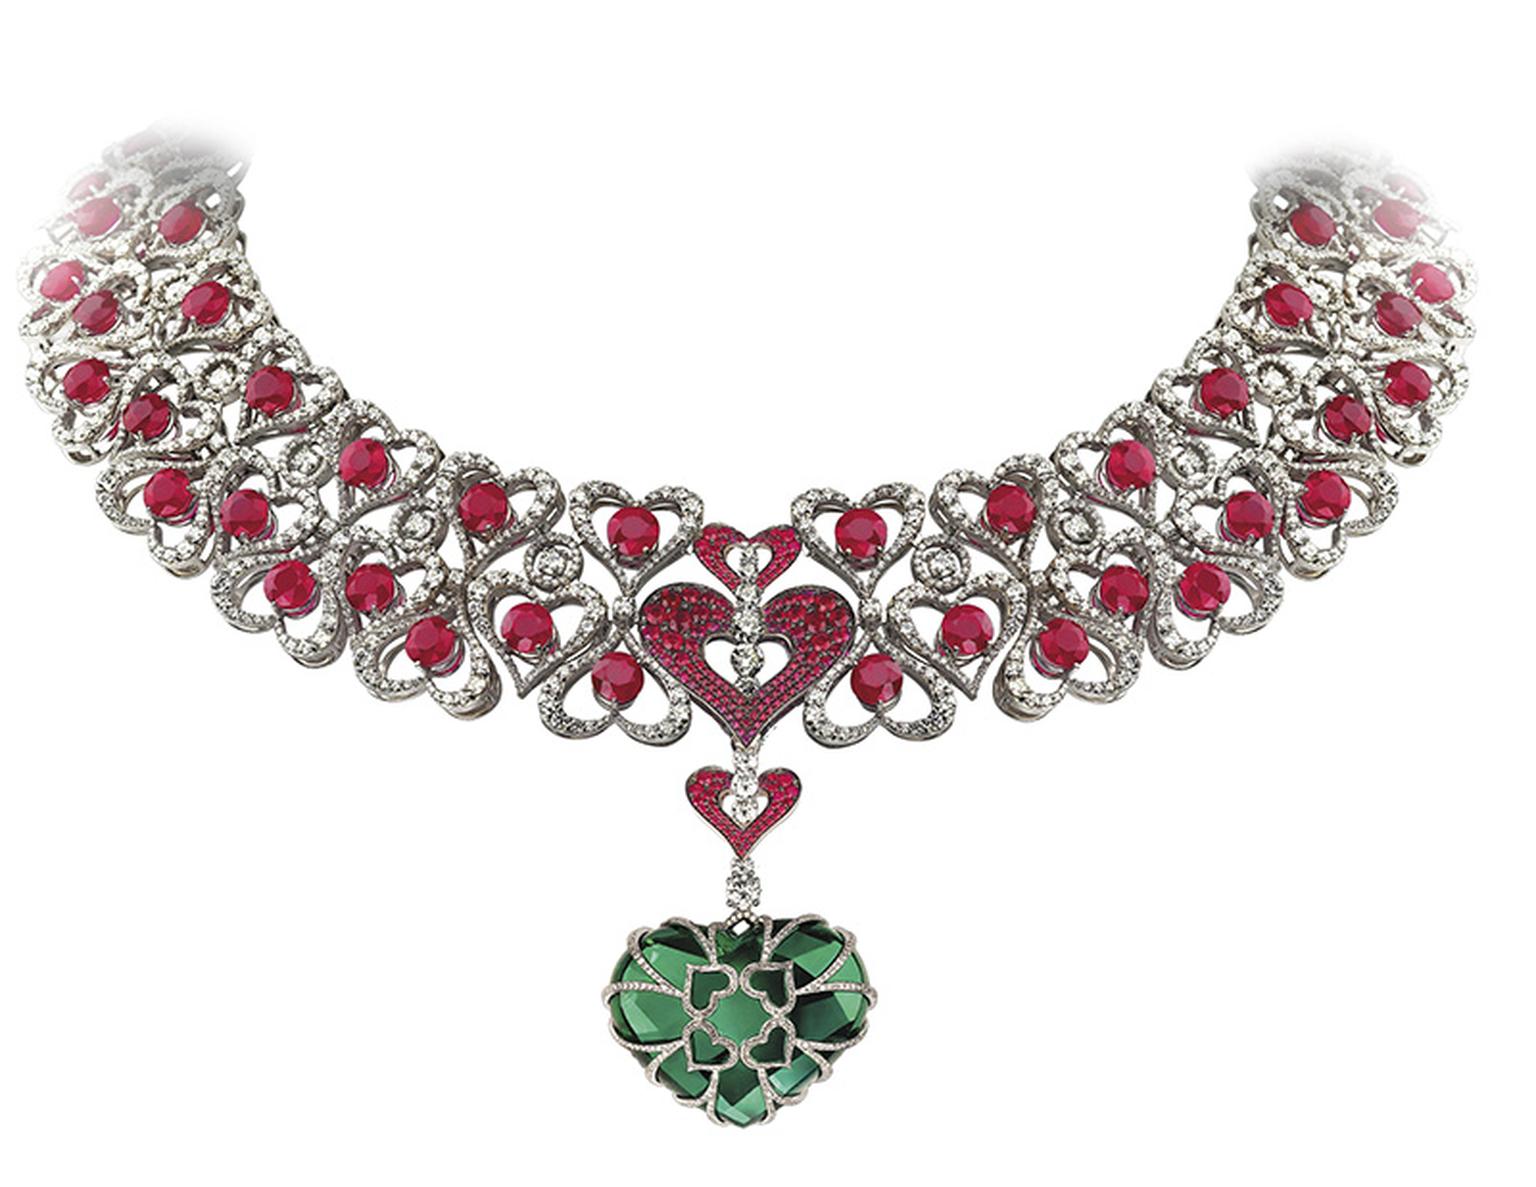 01-AVAKIAN-Heart-Shaped-Columbian-Emerald-Necklace-1.jpg